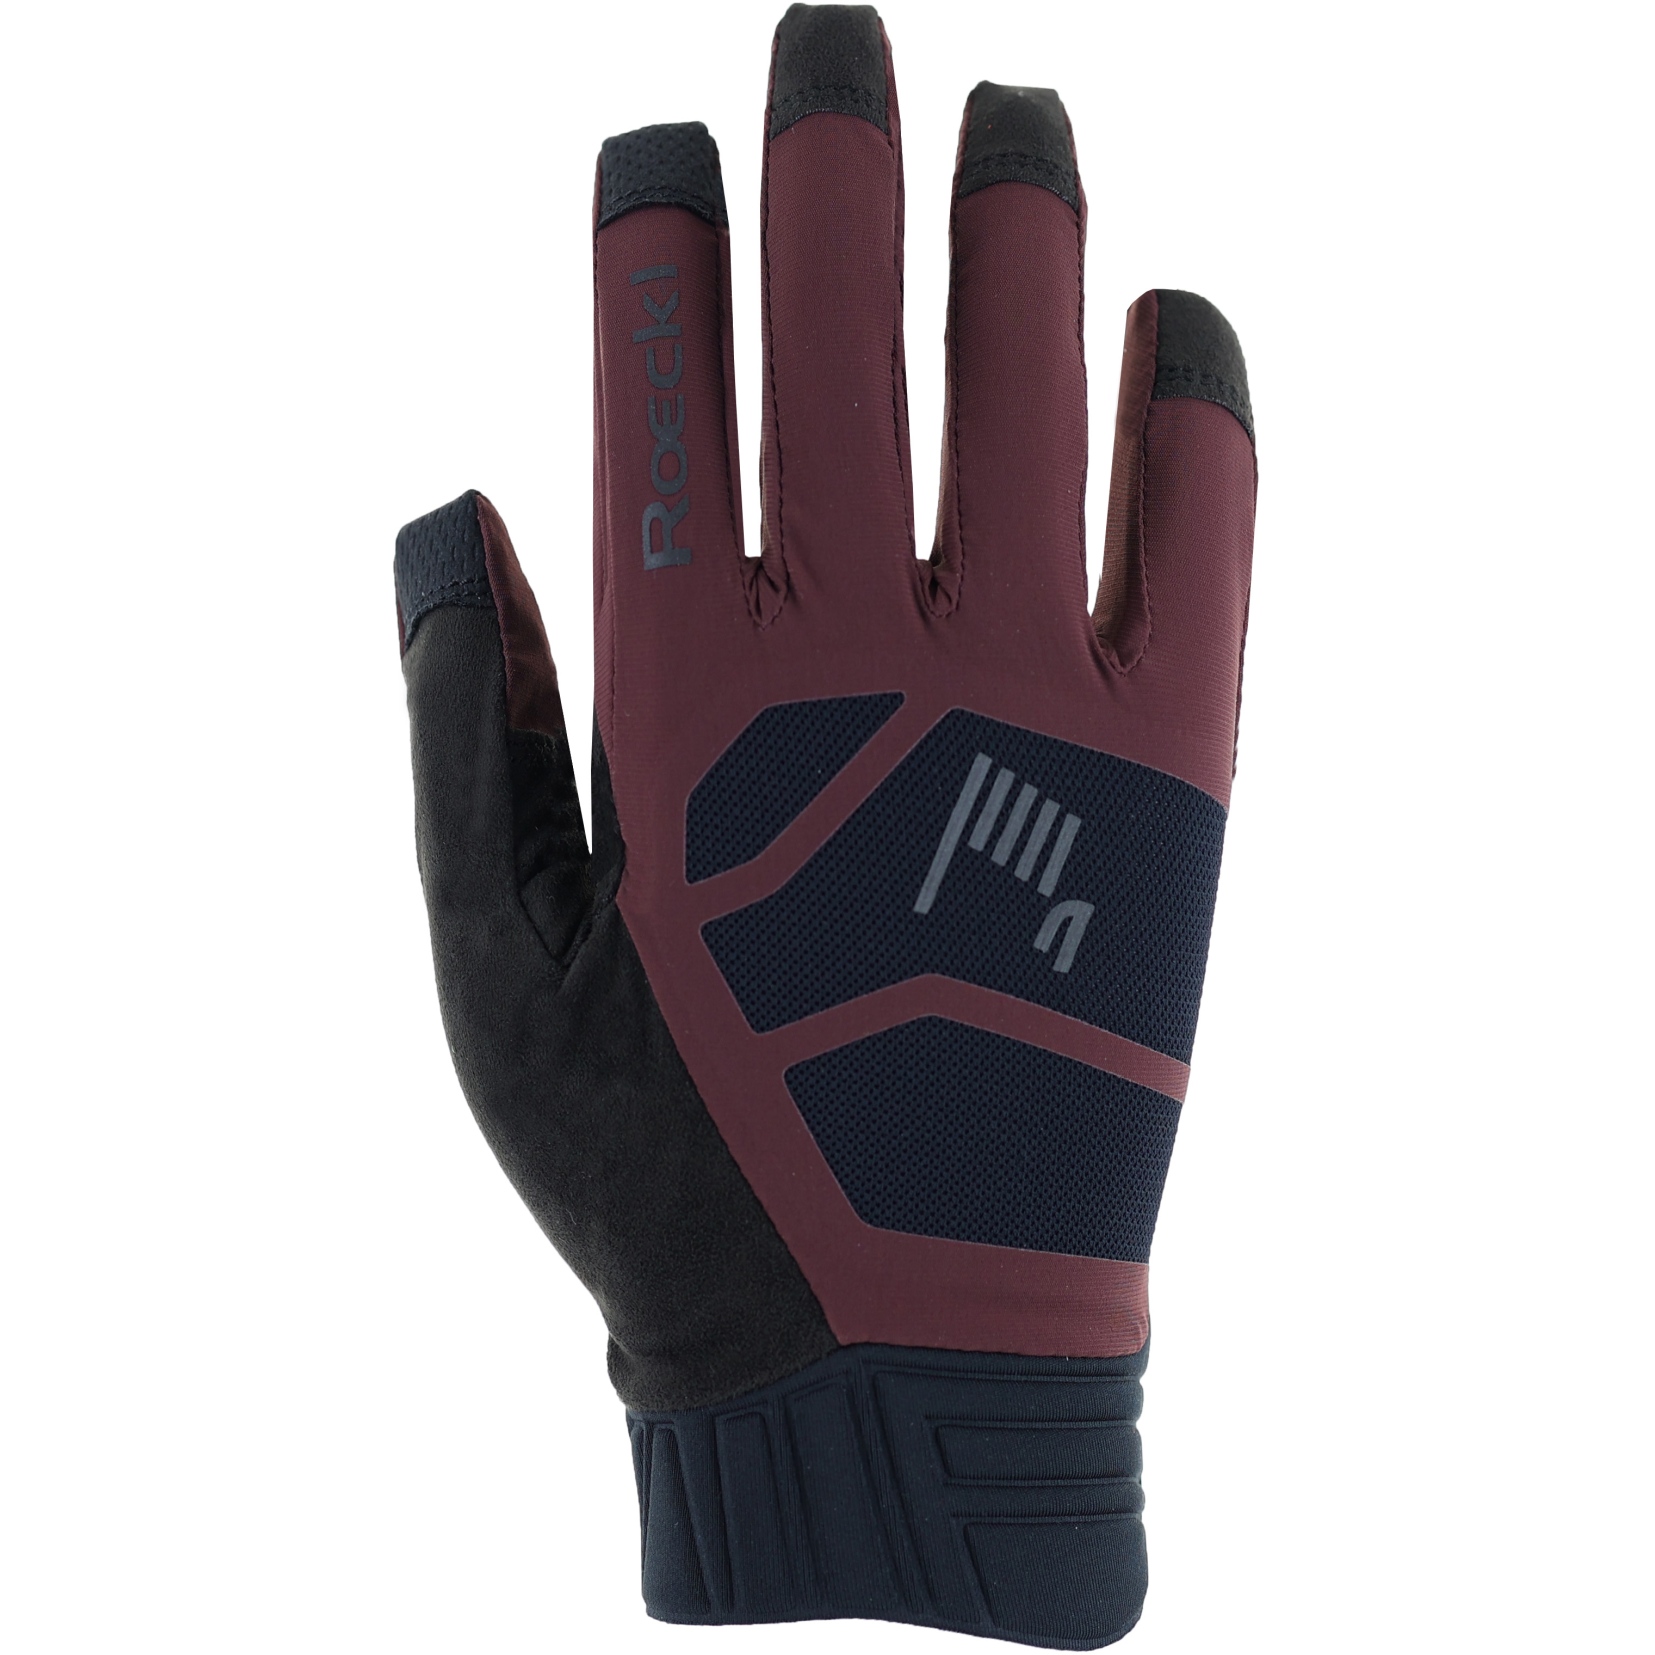 Image of Roeckl Sports Murnau Cycling Gloves - mahogany 7700